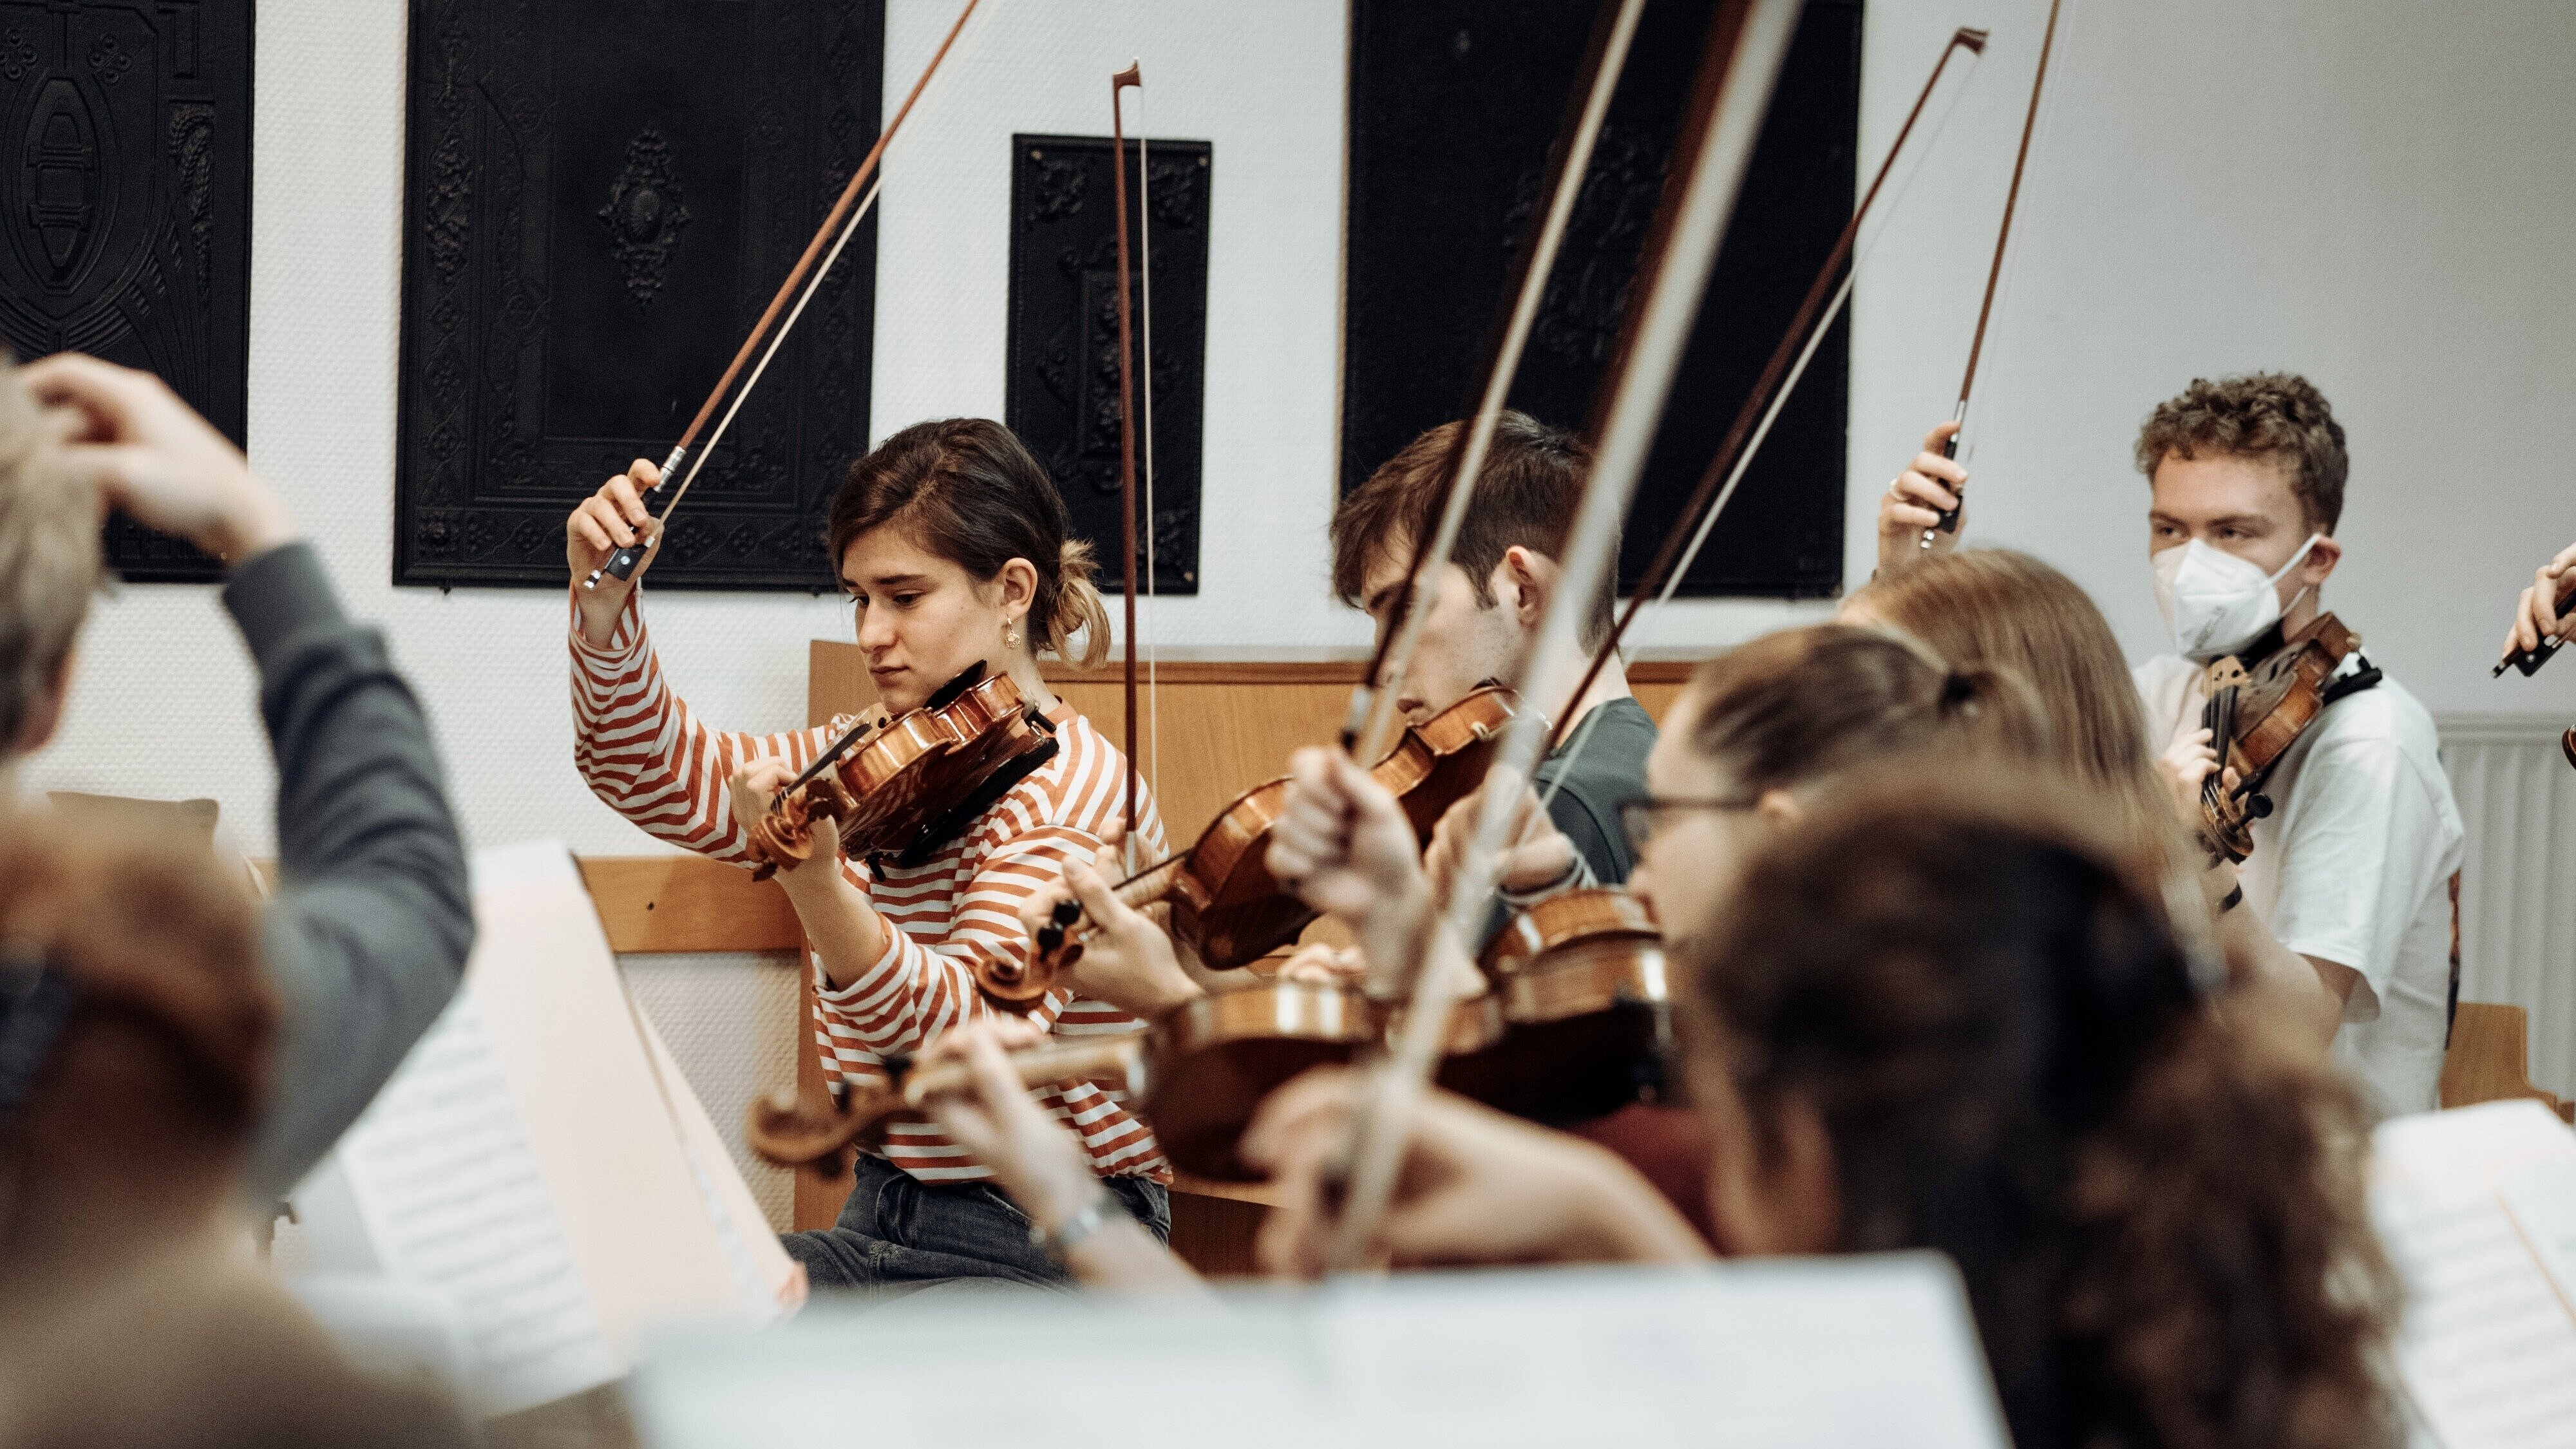 Das Amici Orchester in der Probe, Foto: Max Börner